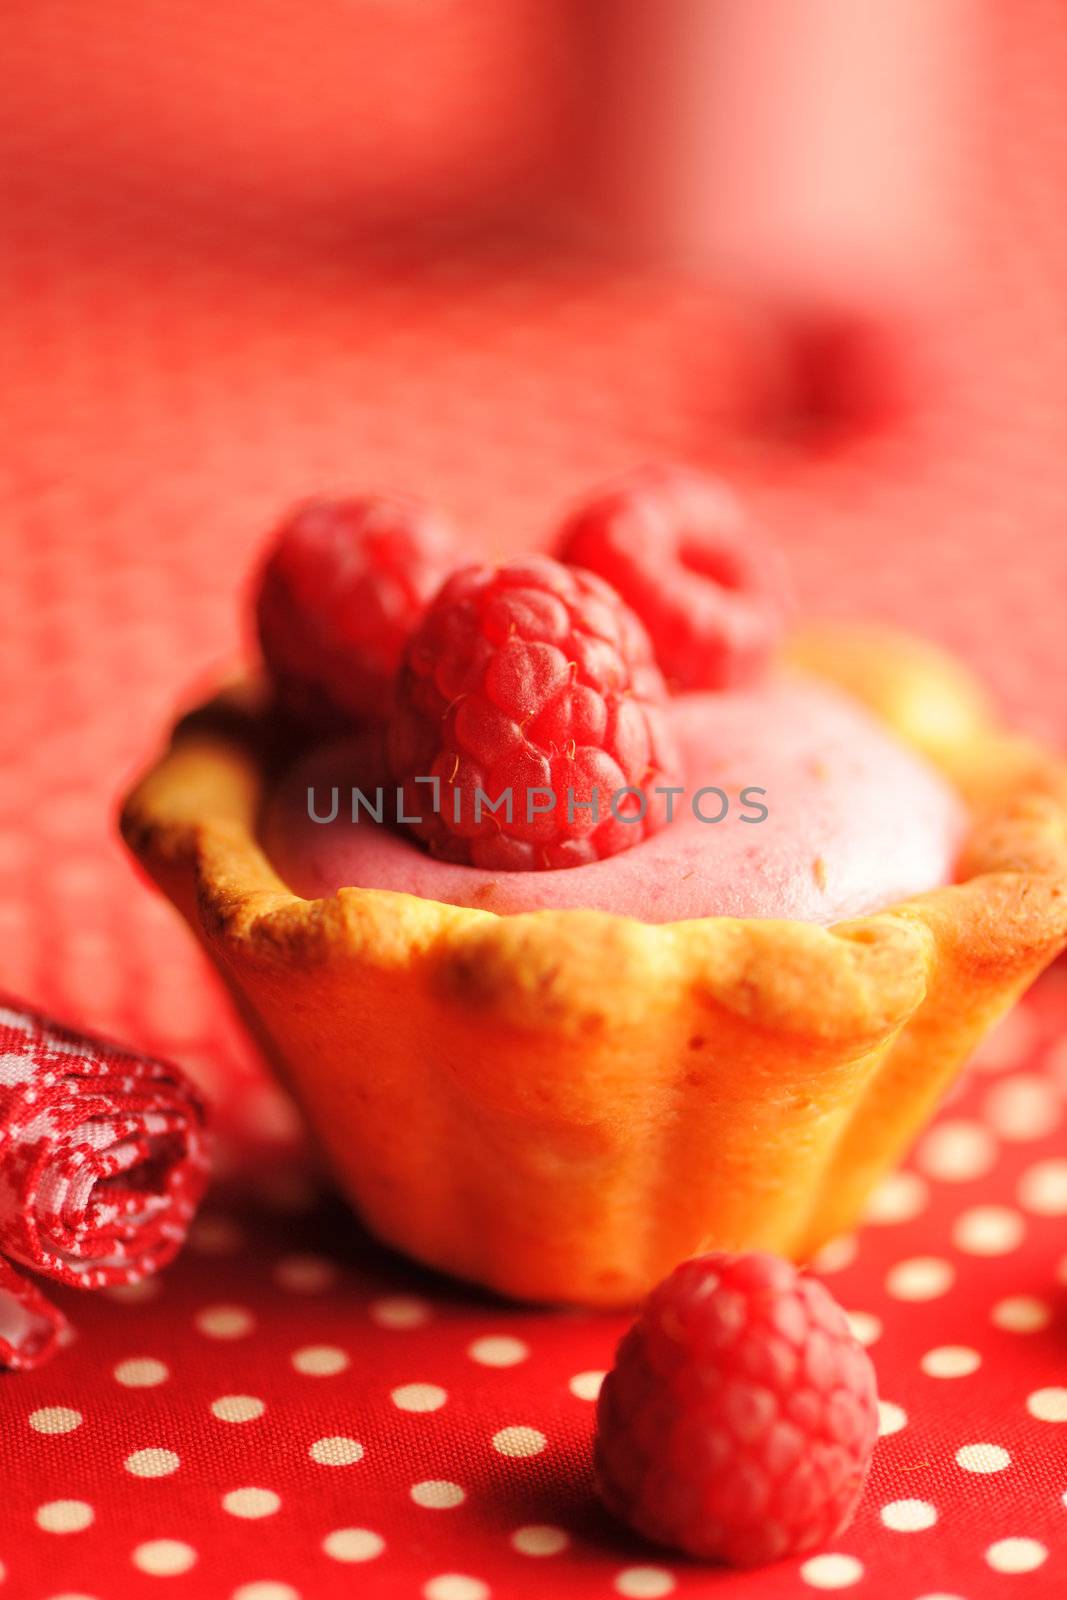 Cake with raspberry yogurt dessert by haveseen